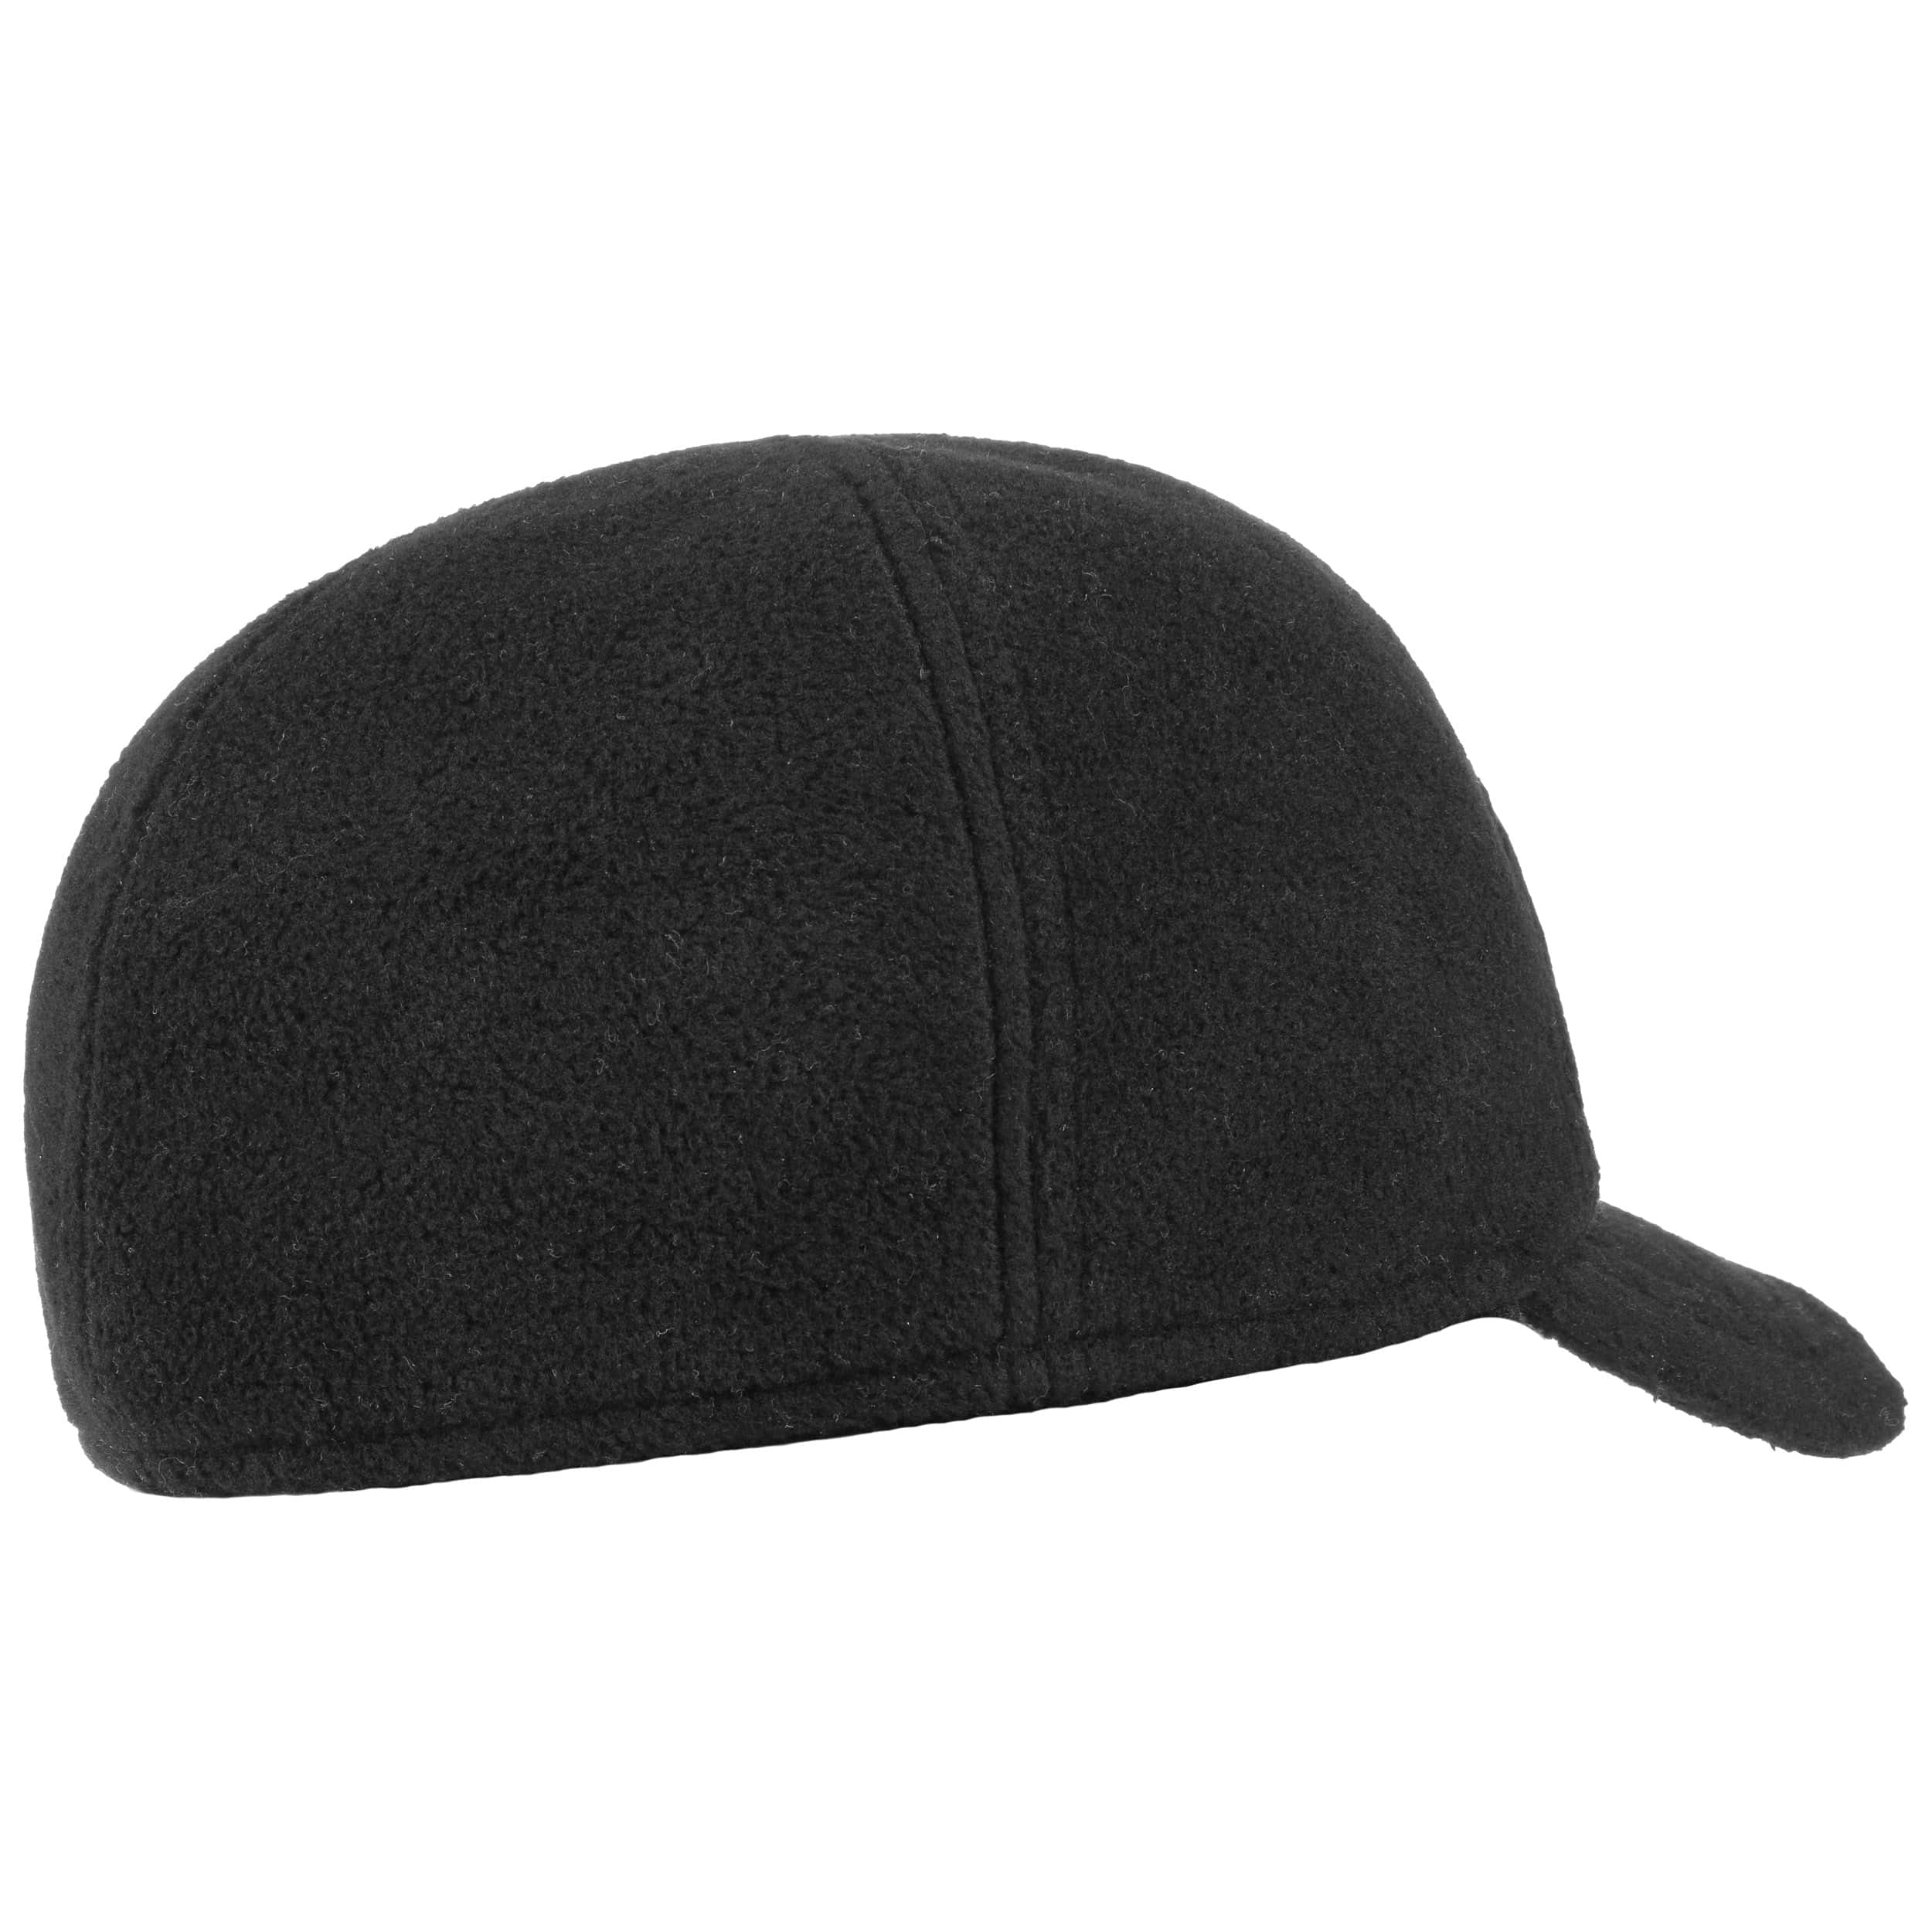 Fleece Cap with Ear Flaps by Jack Wolfskin, GBP 22,95 --> Hats, caps ...